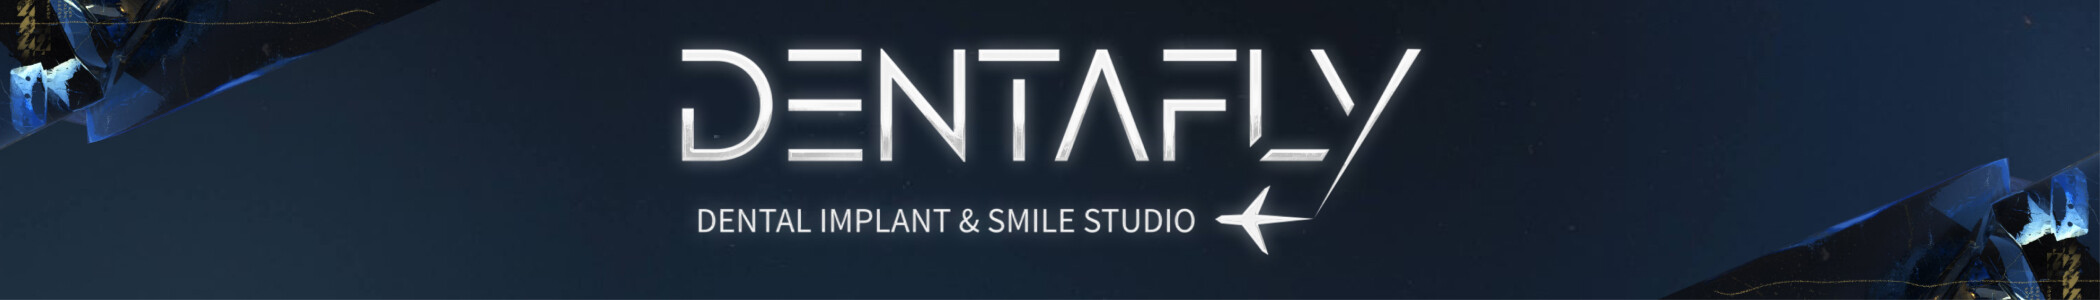 DENTAFLY Dental Implant & Smile Studio - Cover Photo